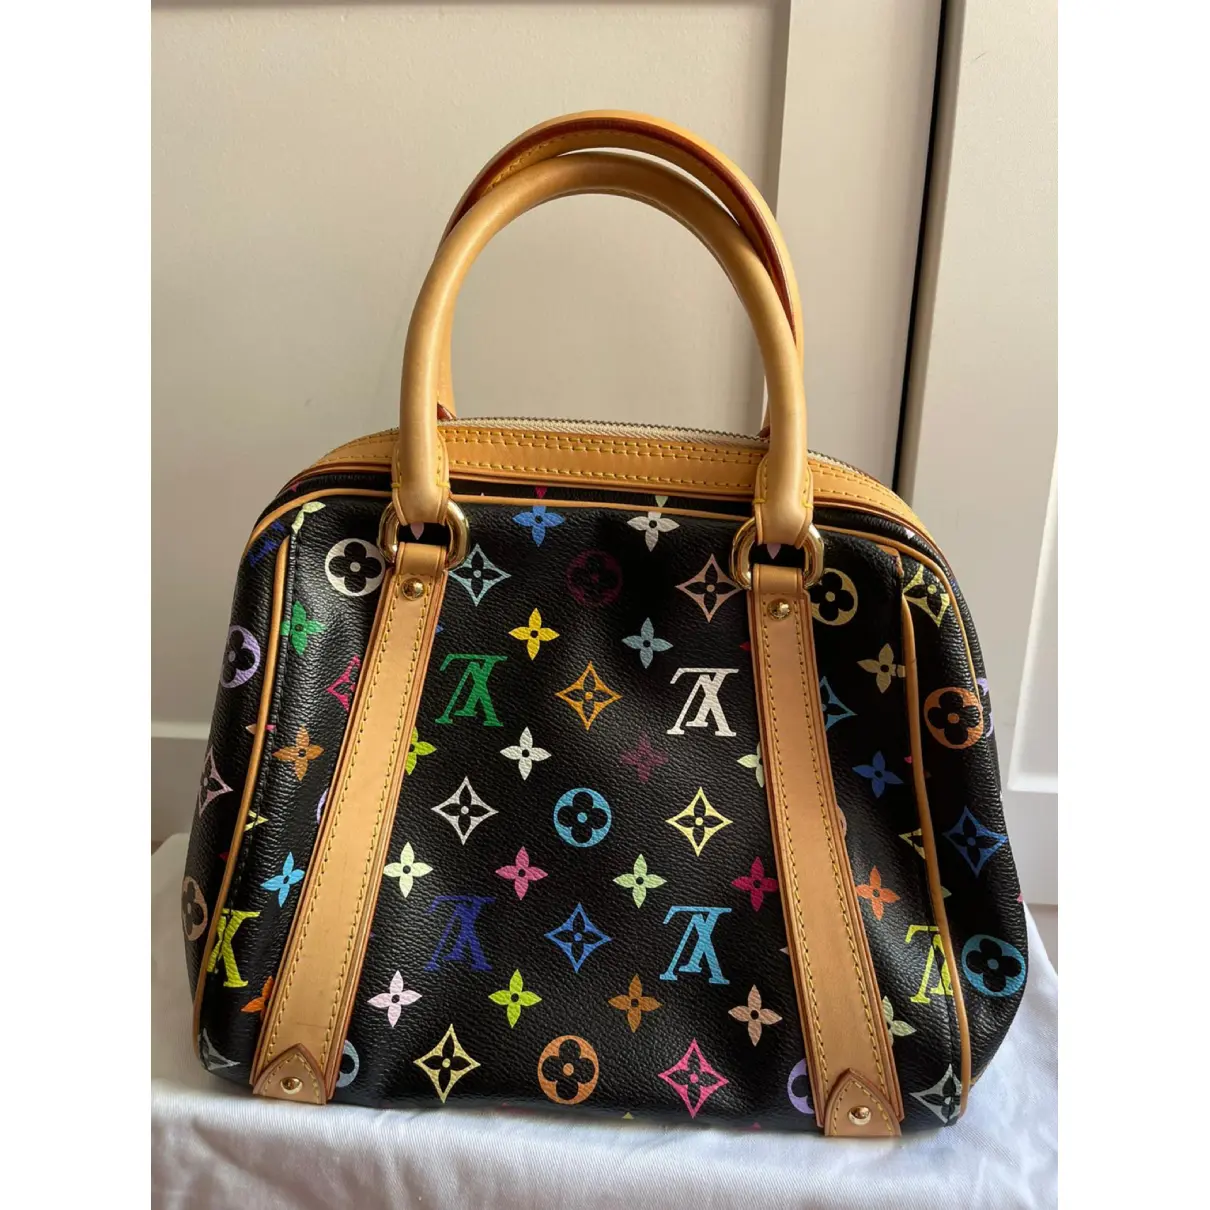 Buy Louis Vuitton Priscilla leather handbag online